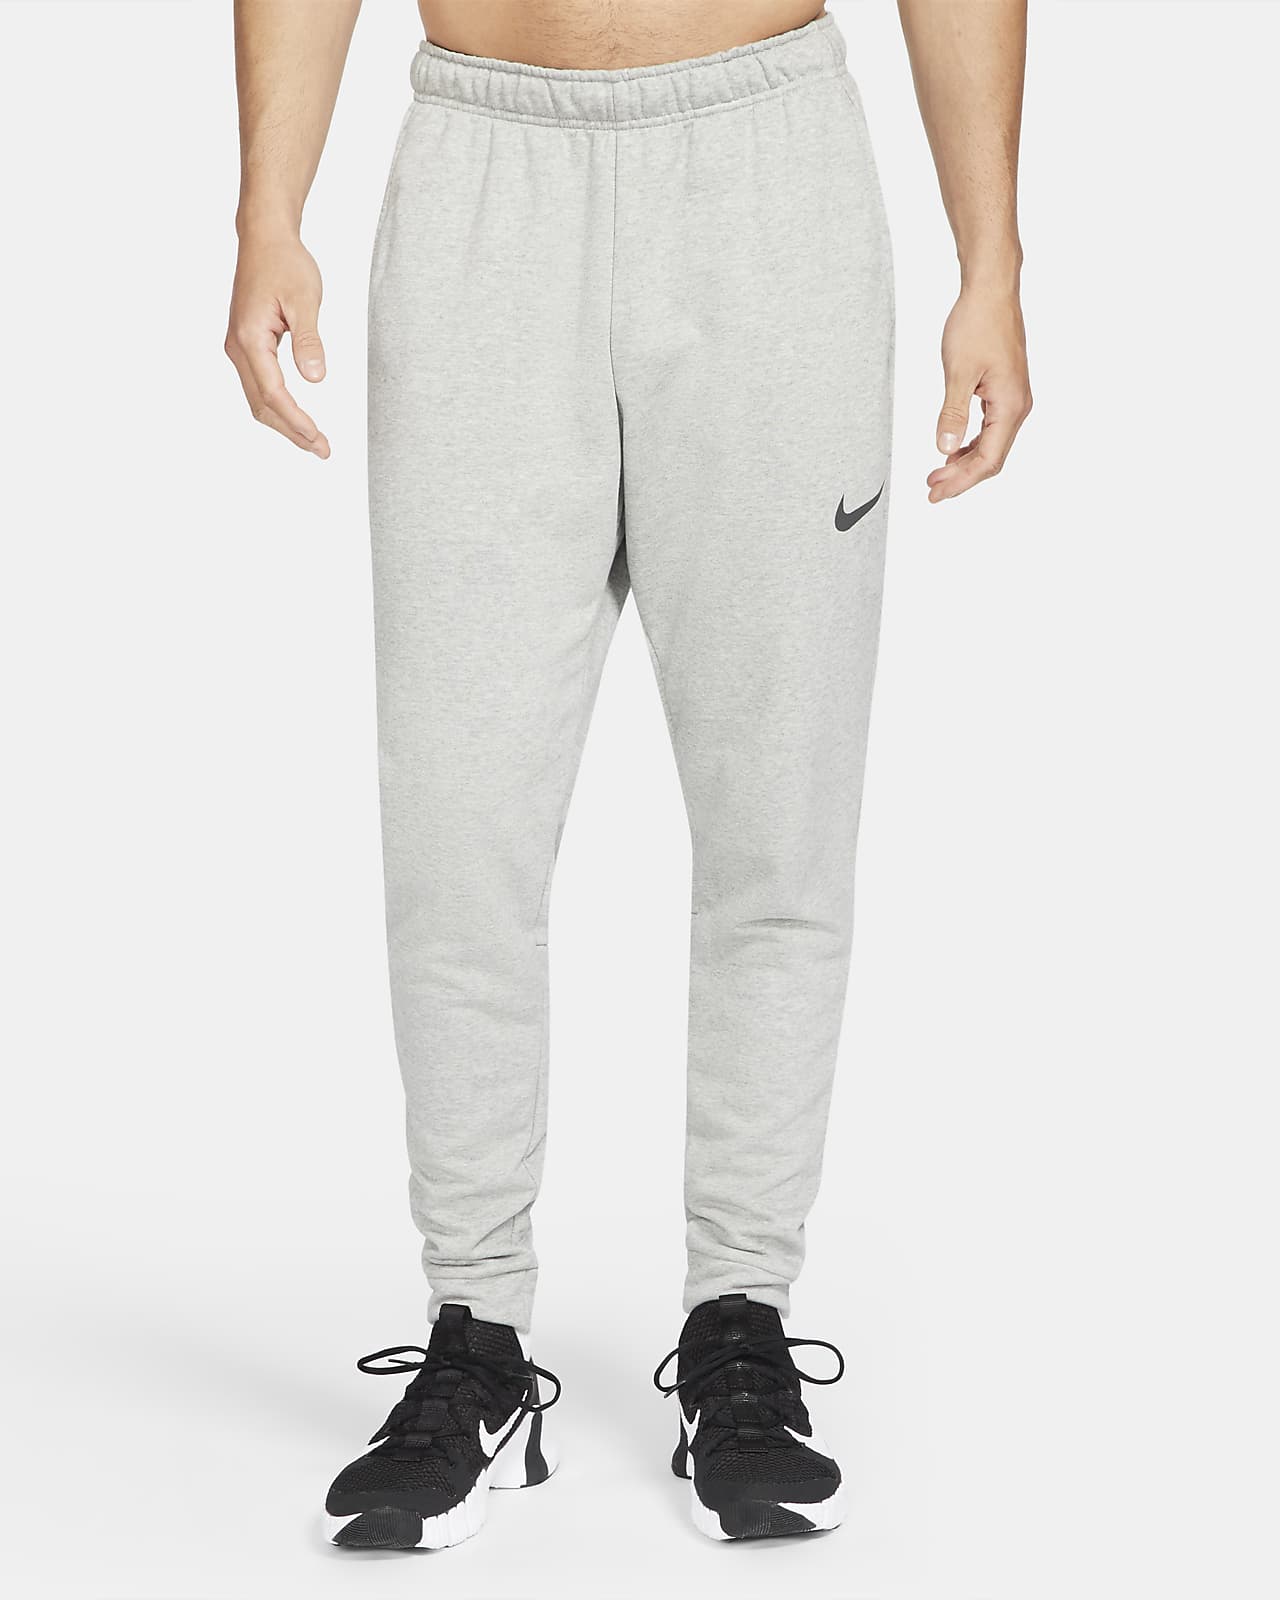 Nike Dry Pantalón Dri-FIT ceñido de tejido Fleece - Hombre